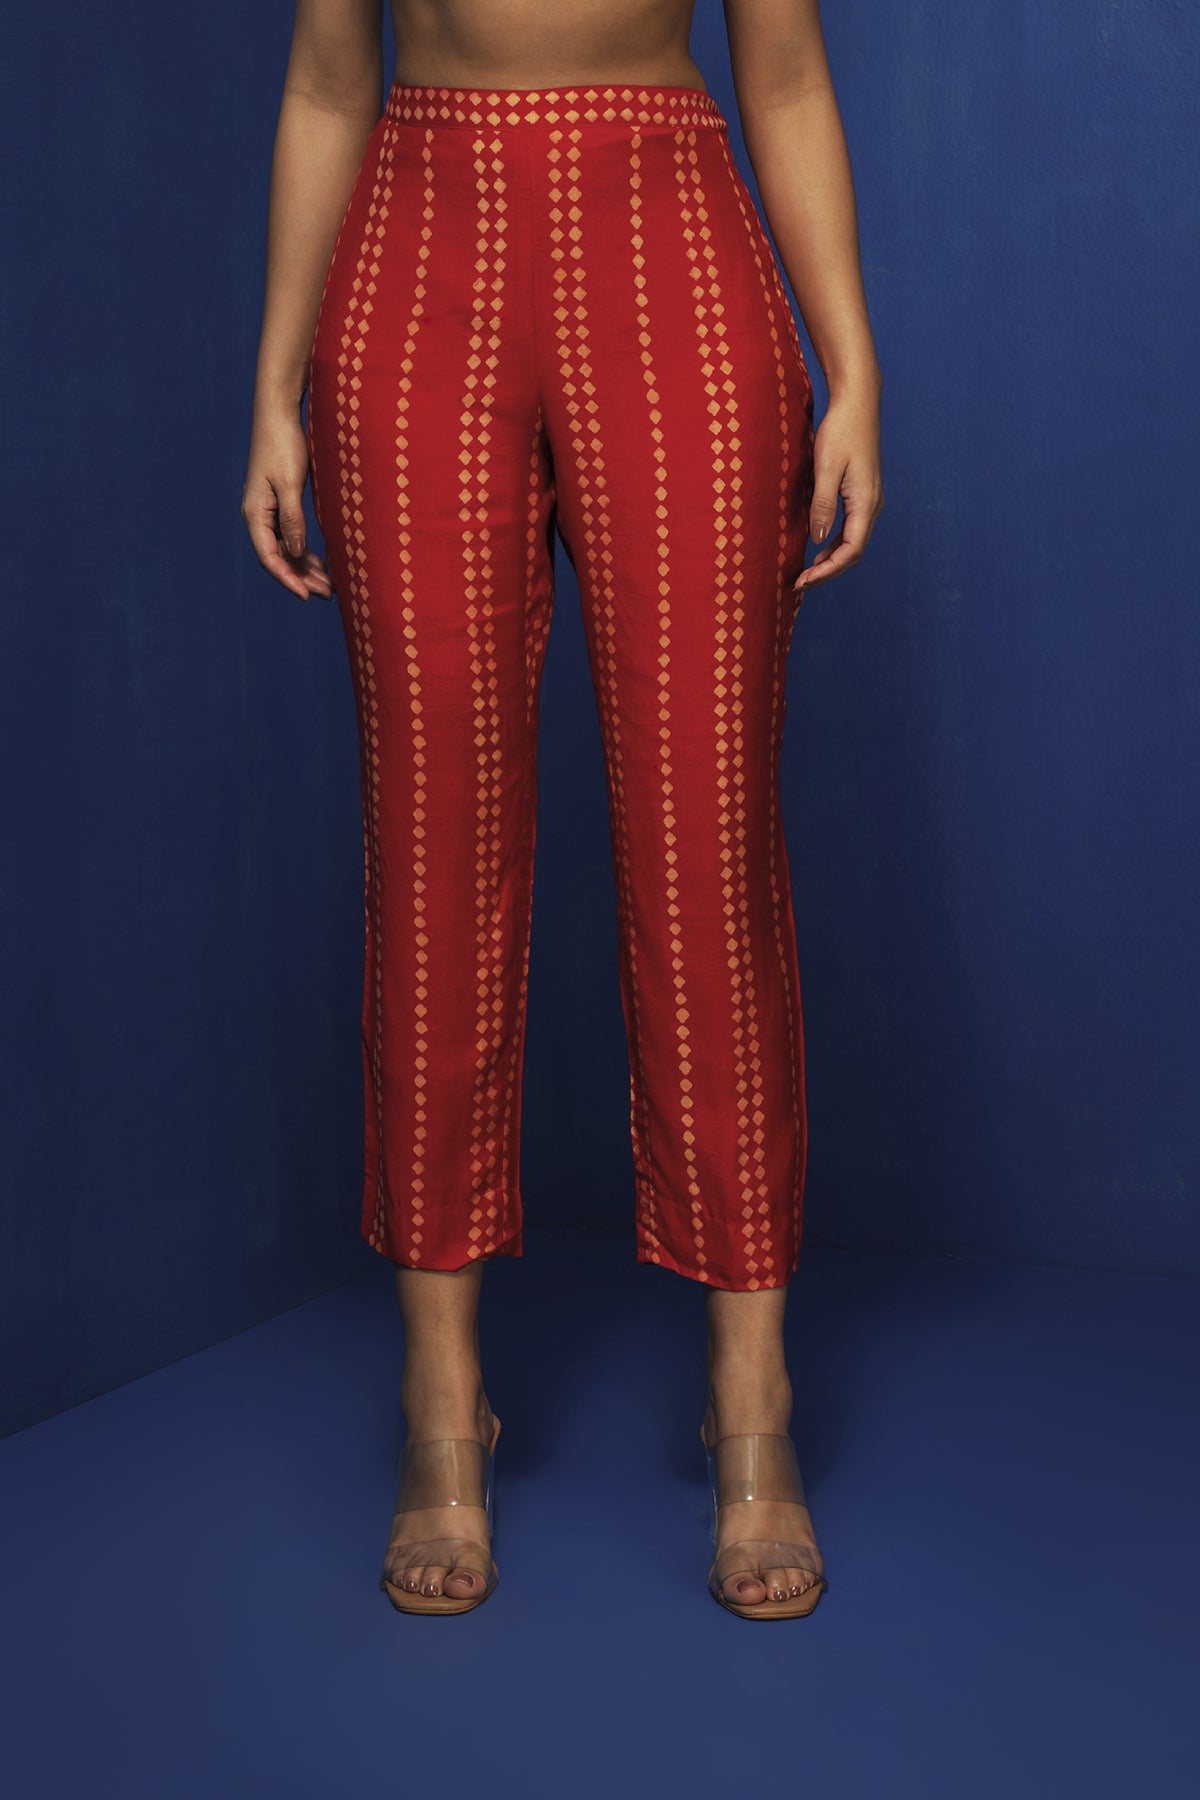 Red & fuchsia ombre block printed tunic set